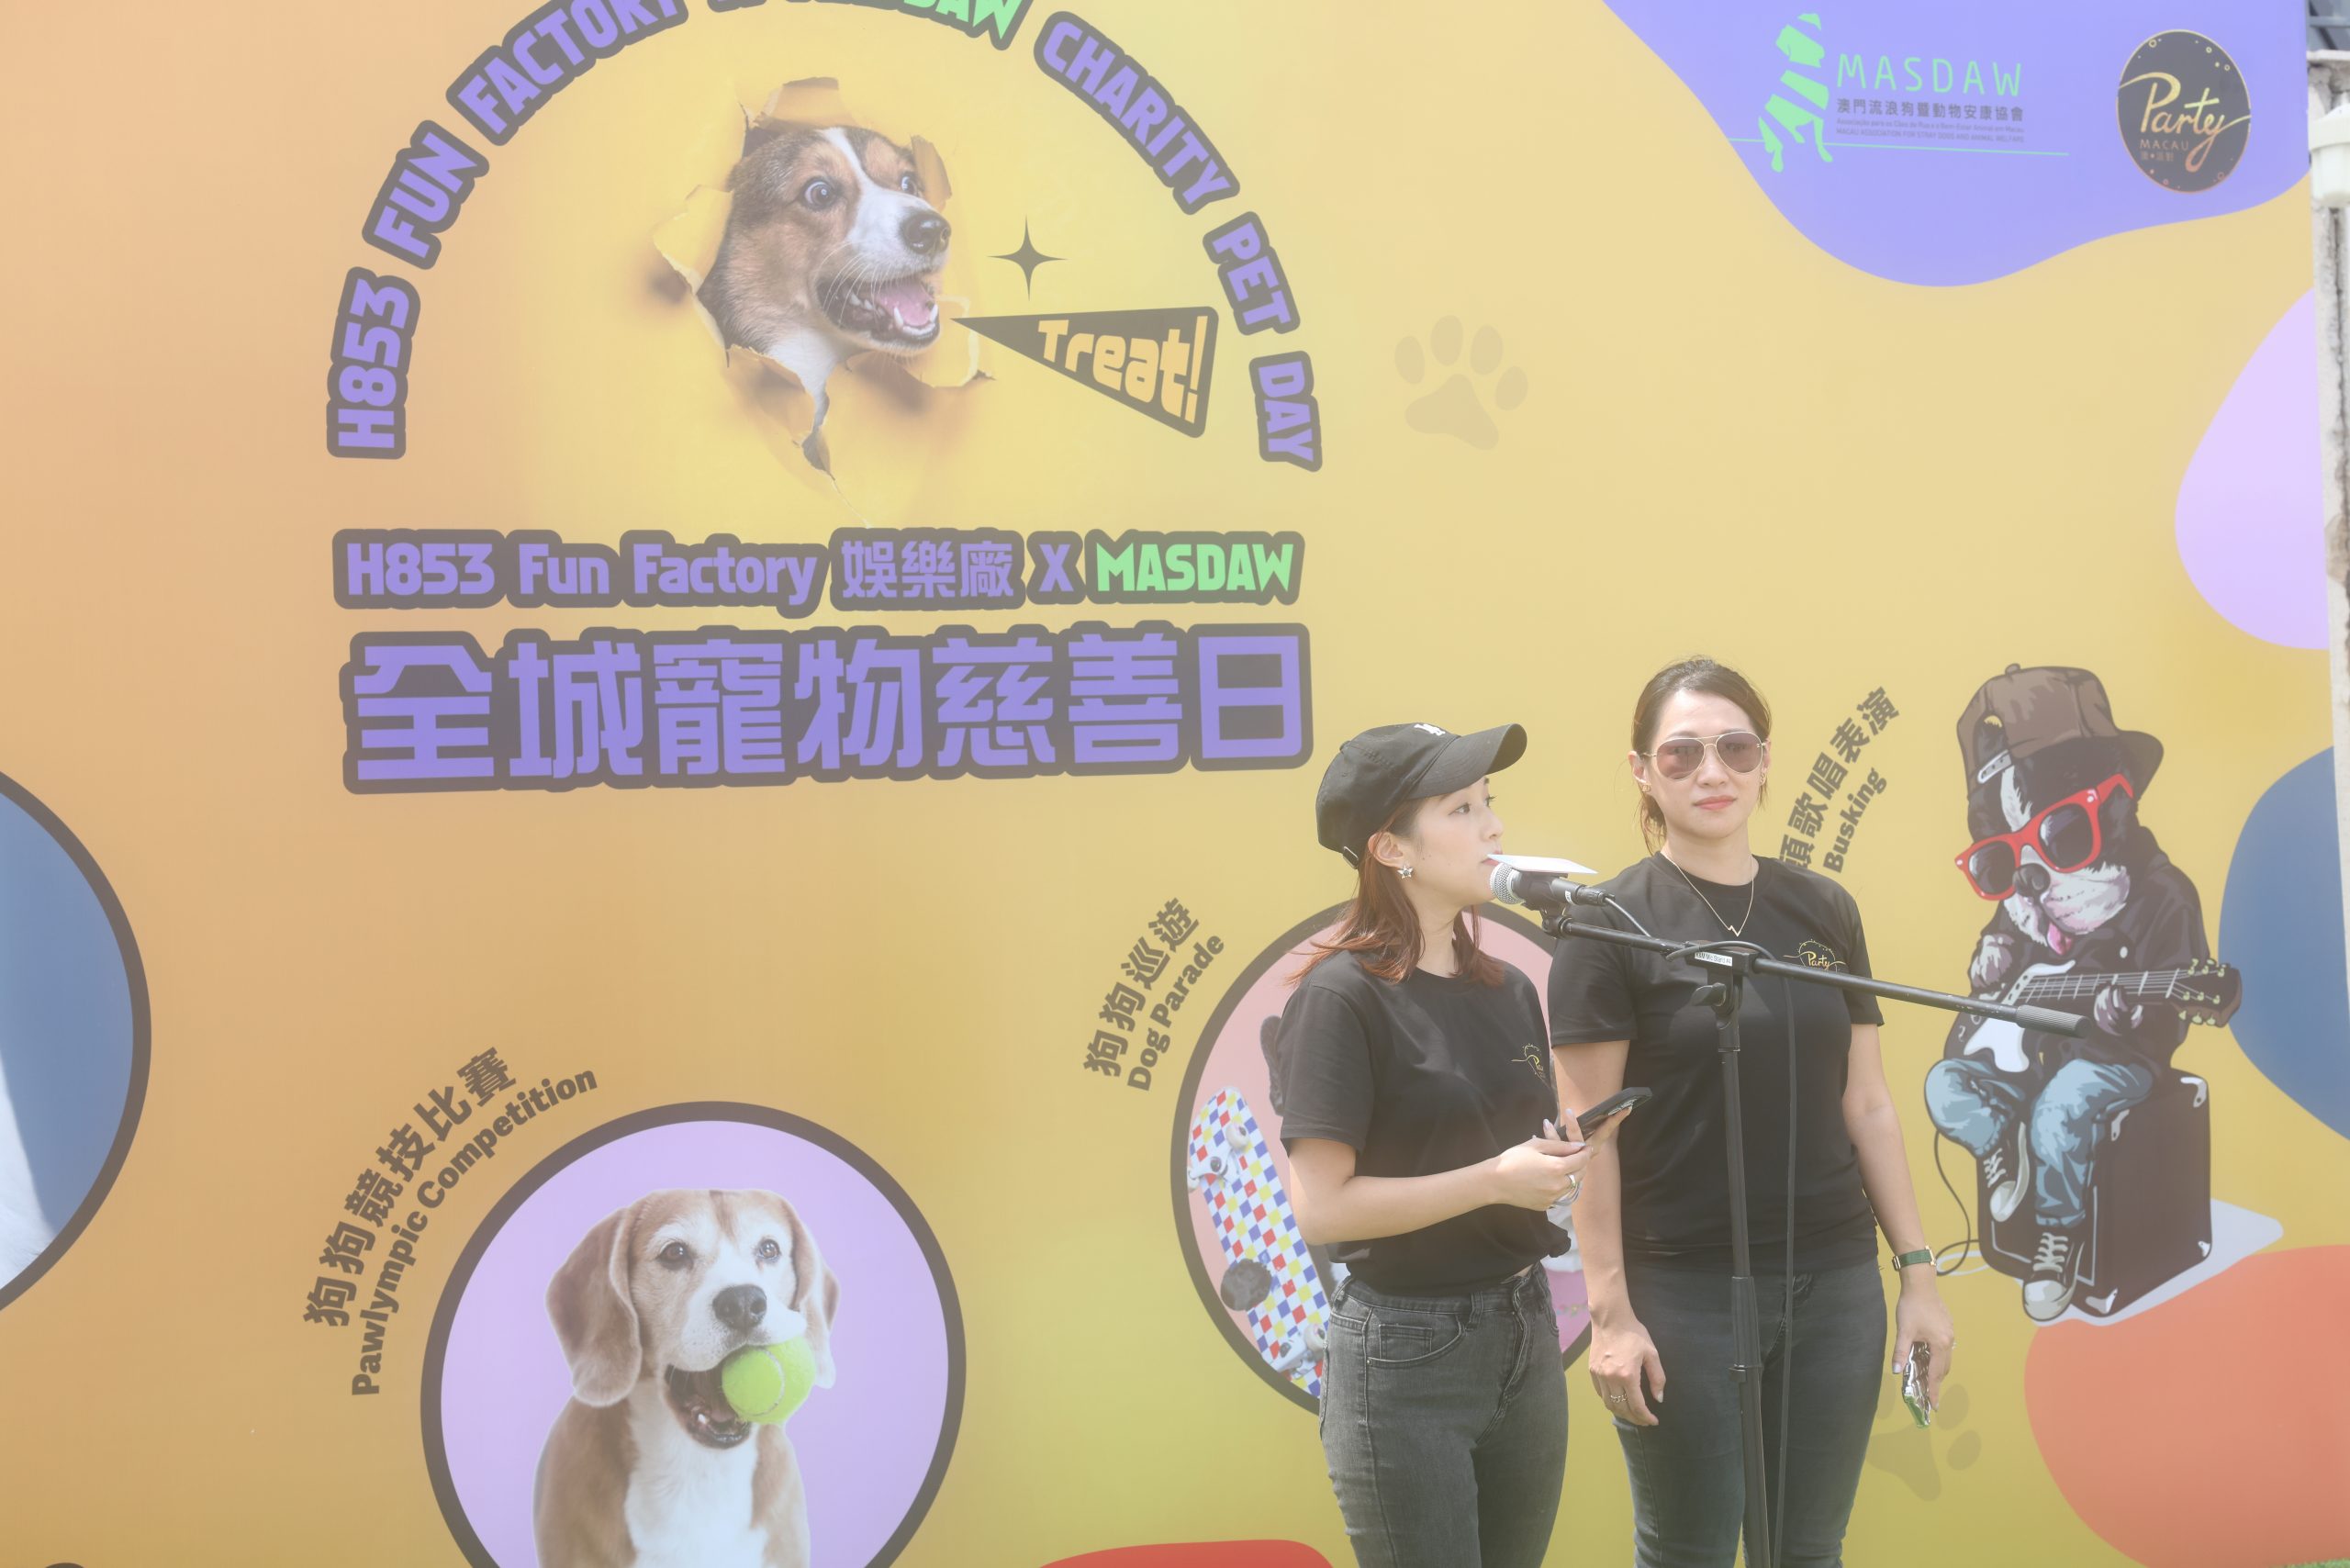 Lisboeta Macau H853 Fun Factory andMacau Association For Stray Dogs And  Animal Welfare jointly launchedCharity Pet Day - Lisboeta Macau